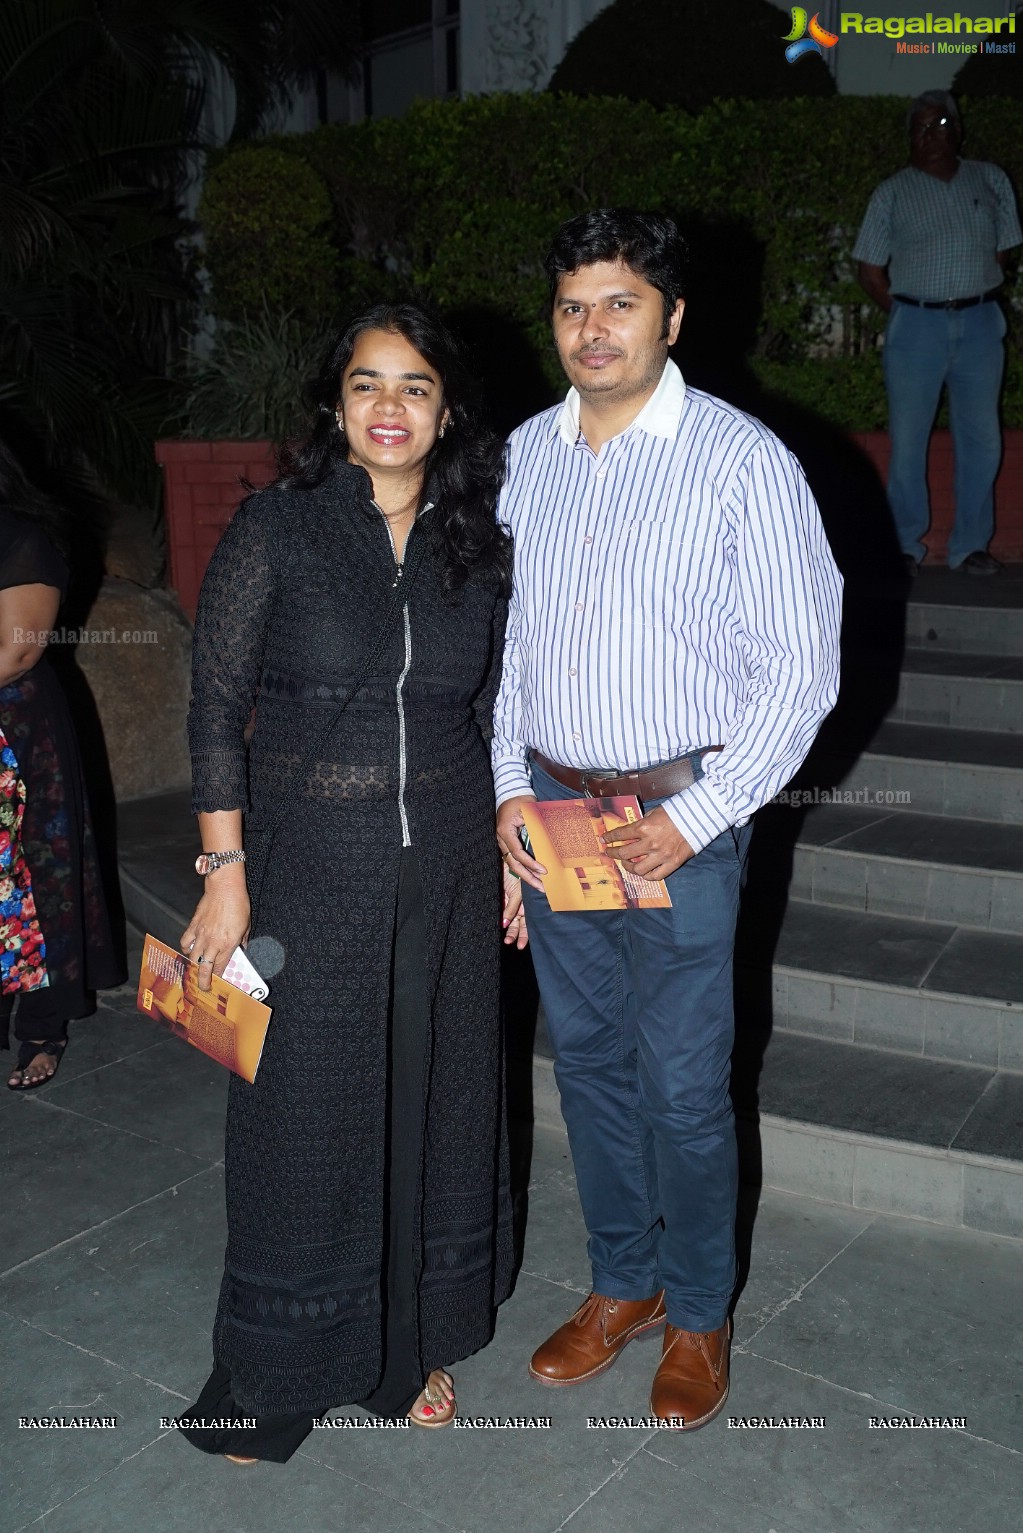 Rehmat Manzil by Qadir Ali Baig Theatre Foundation at Taj Deccan